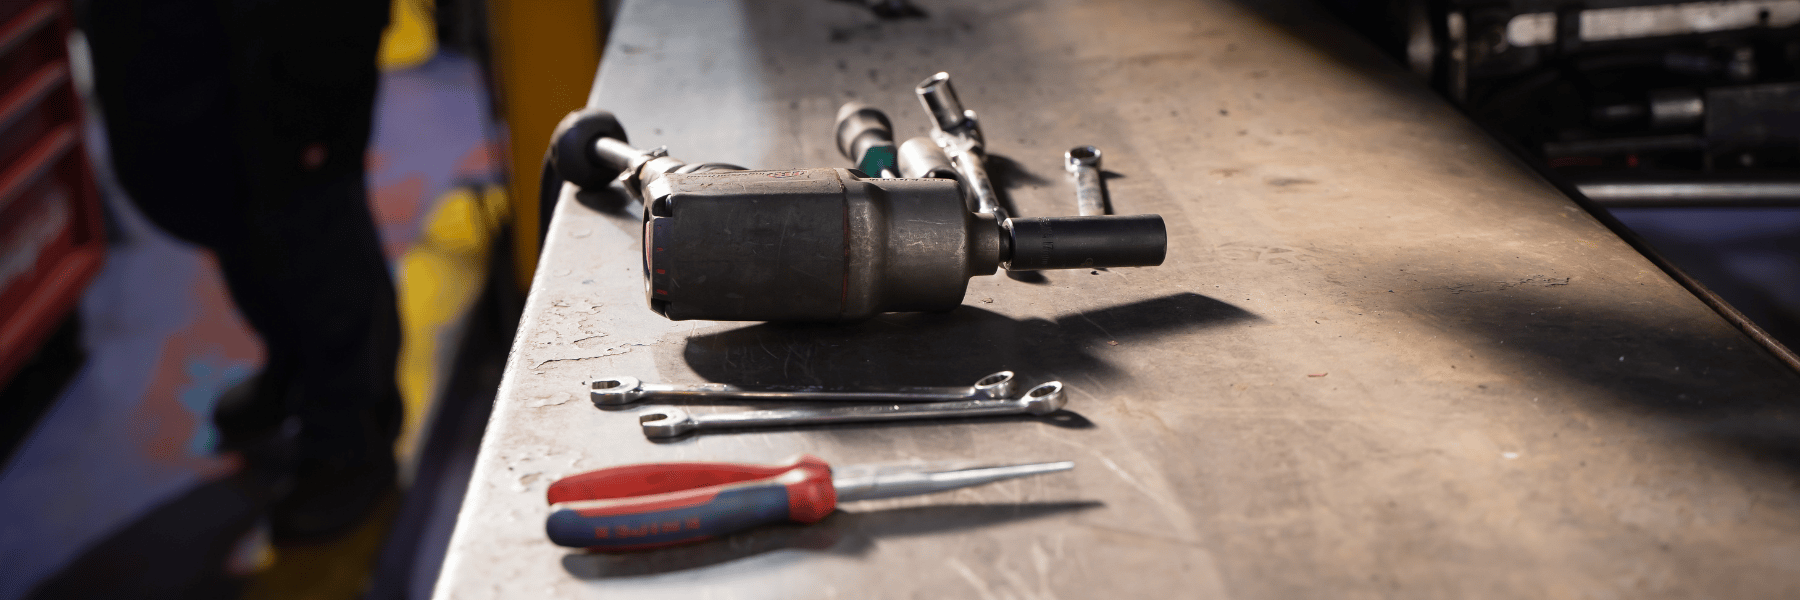 Garage workshop tools